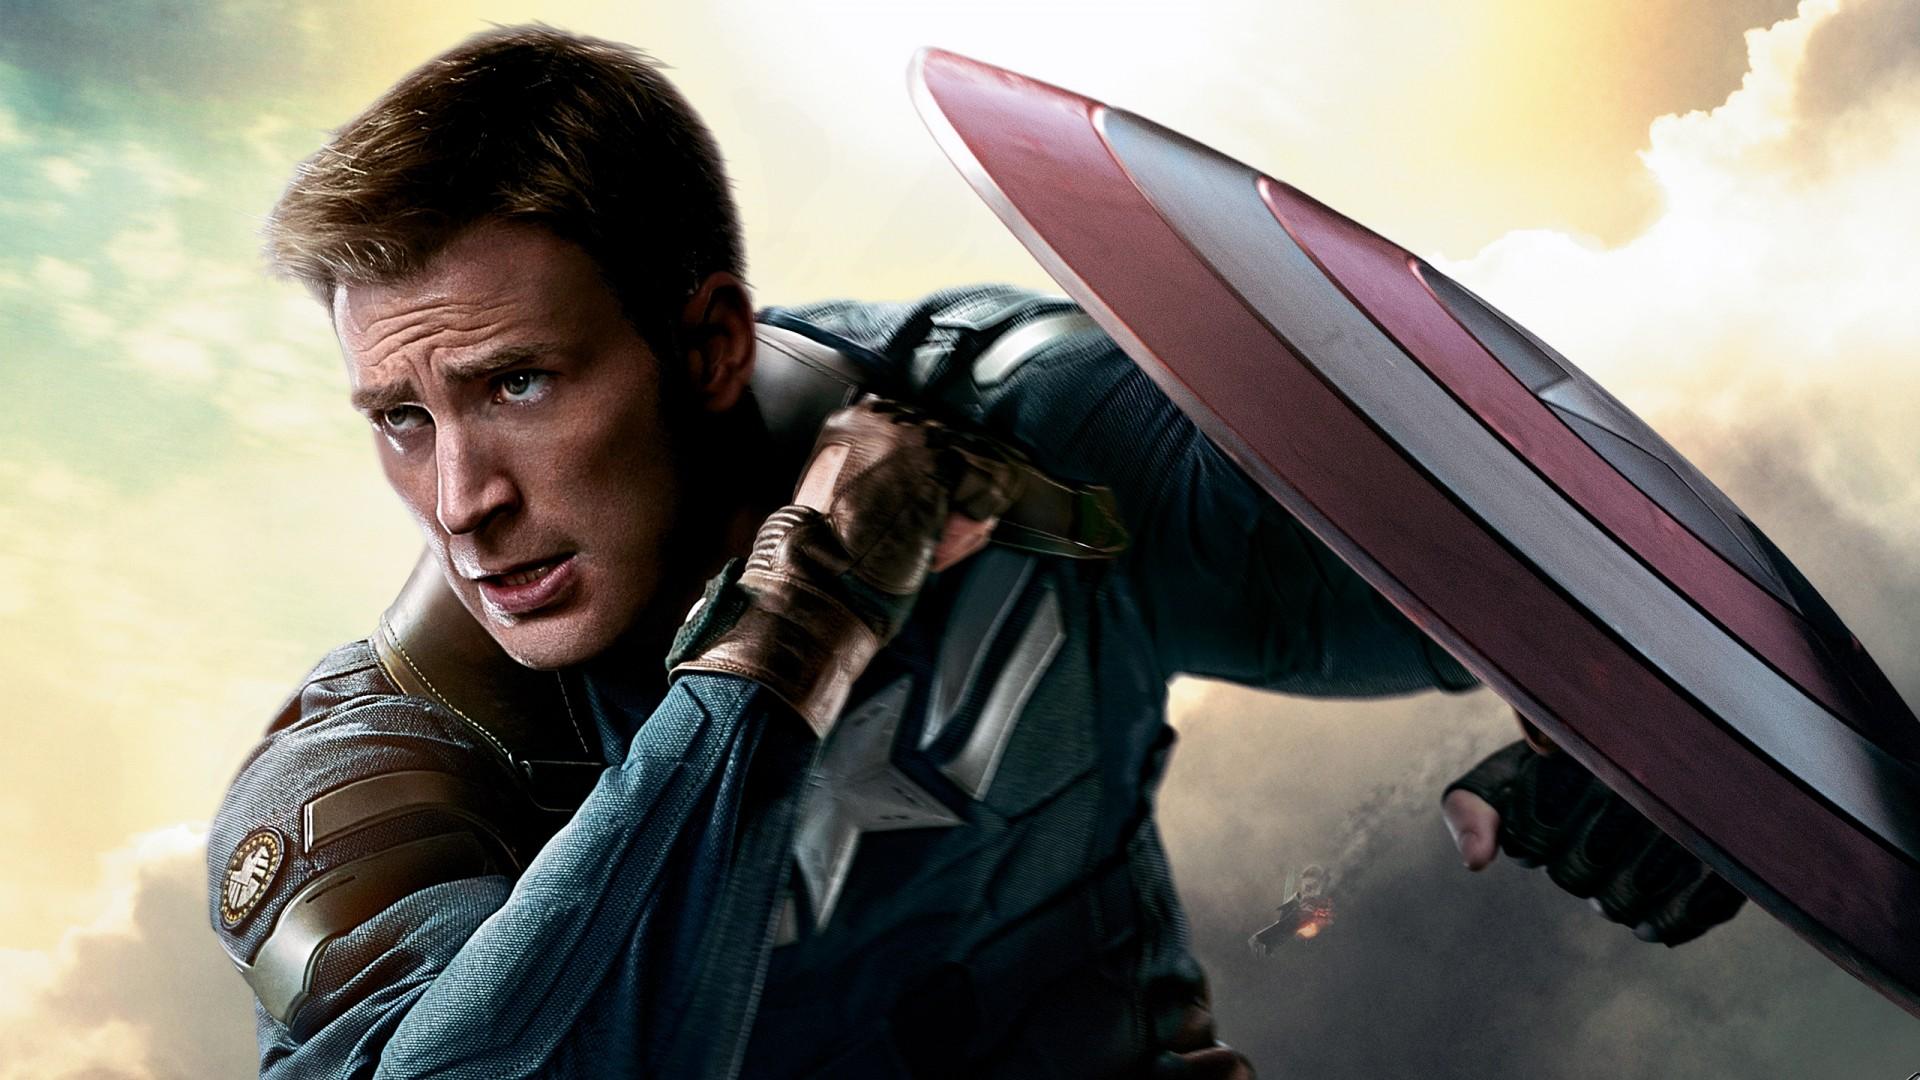 Chris Evans in Captain America Winter Soldier Wallpaper